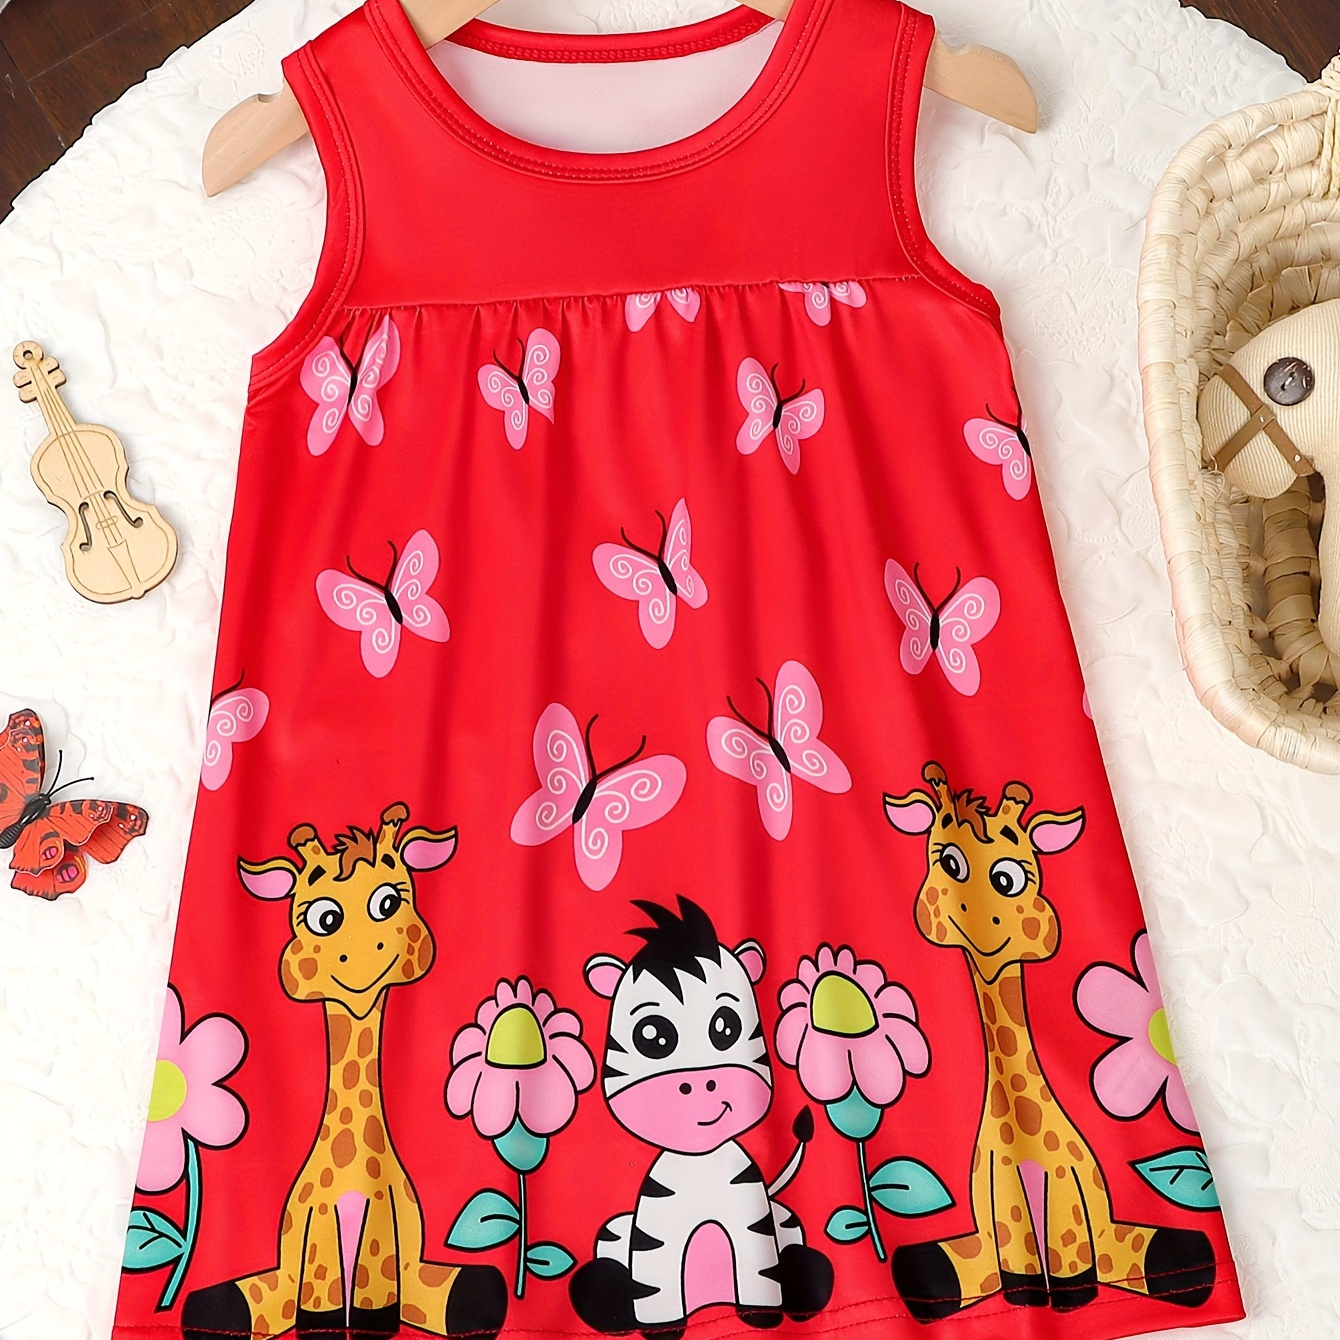 

Baby's Casual Cartoon Giraffe Zebra Butterfly Pattern Sleeveless Dress, Infant & Toddler Girl's Clothing For Summer/spring, As Gift